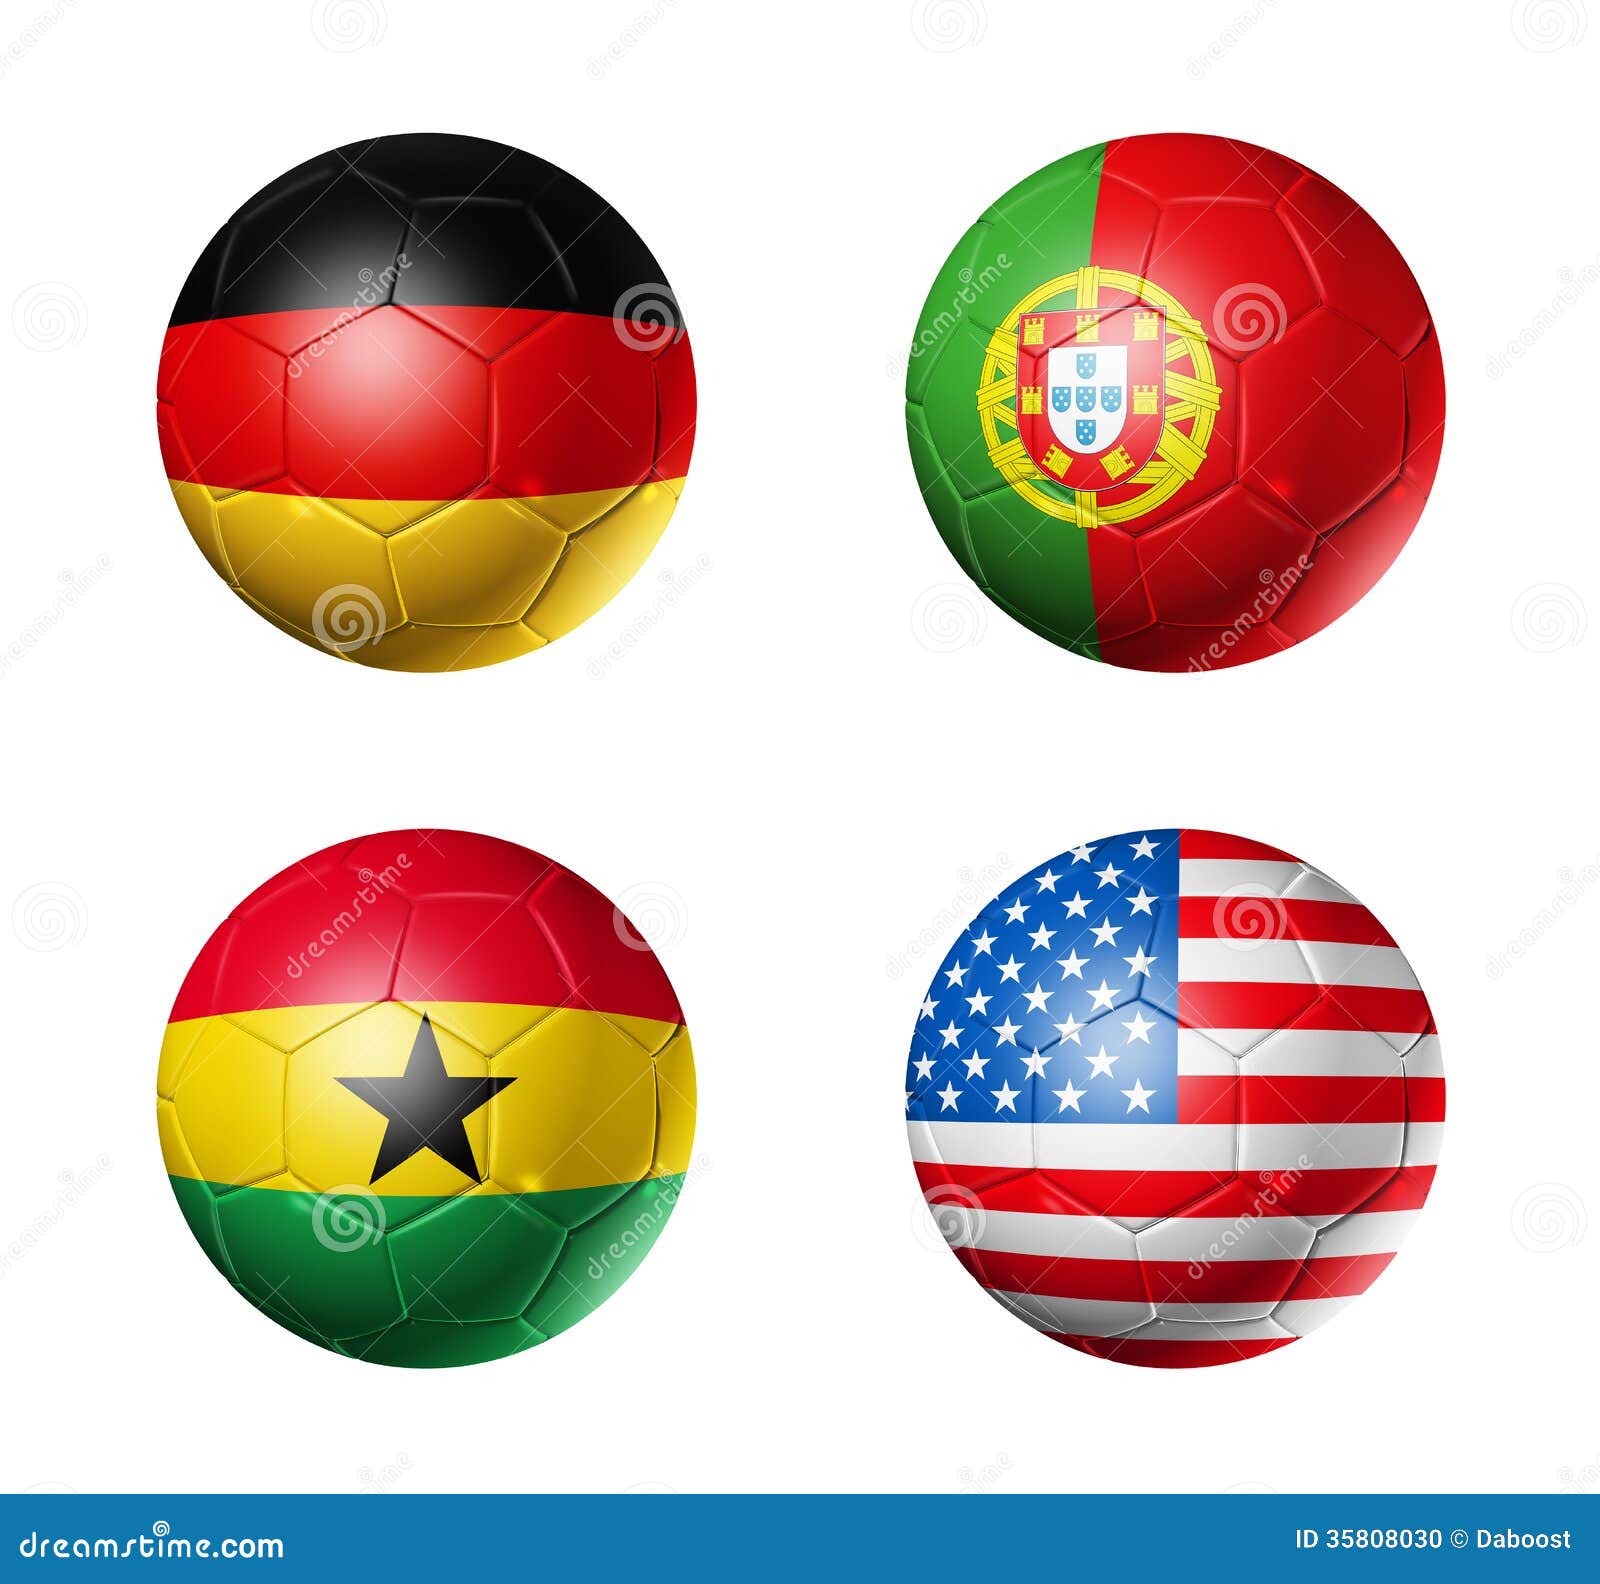 brazil-world-cup-group-g-flags-soccer-ba